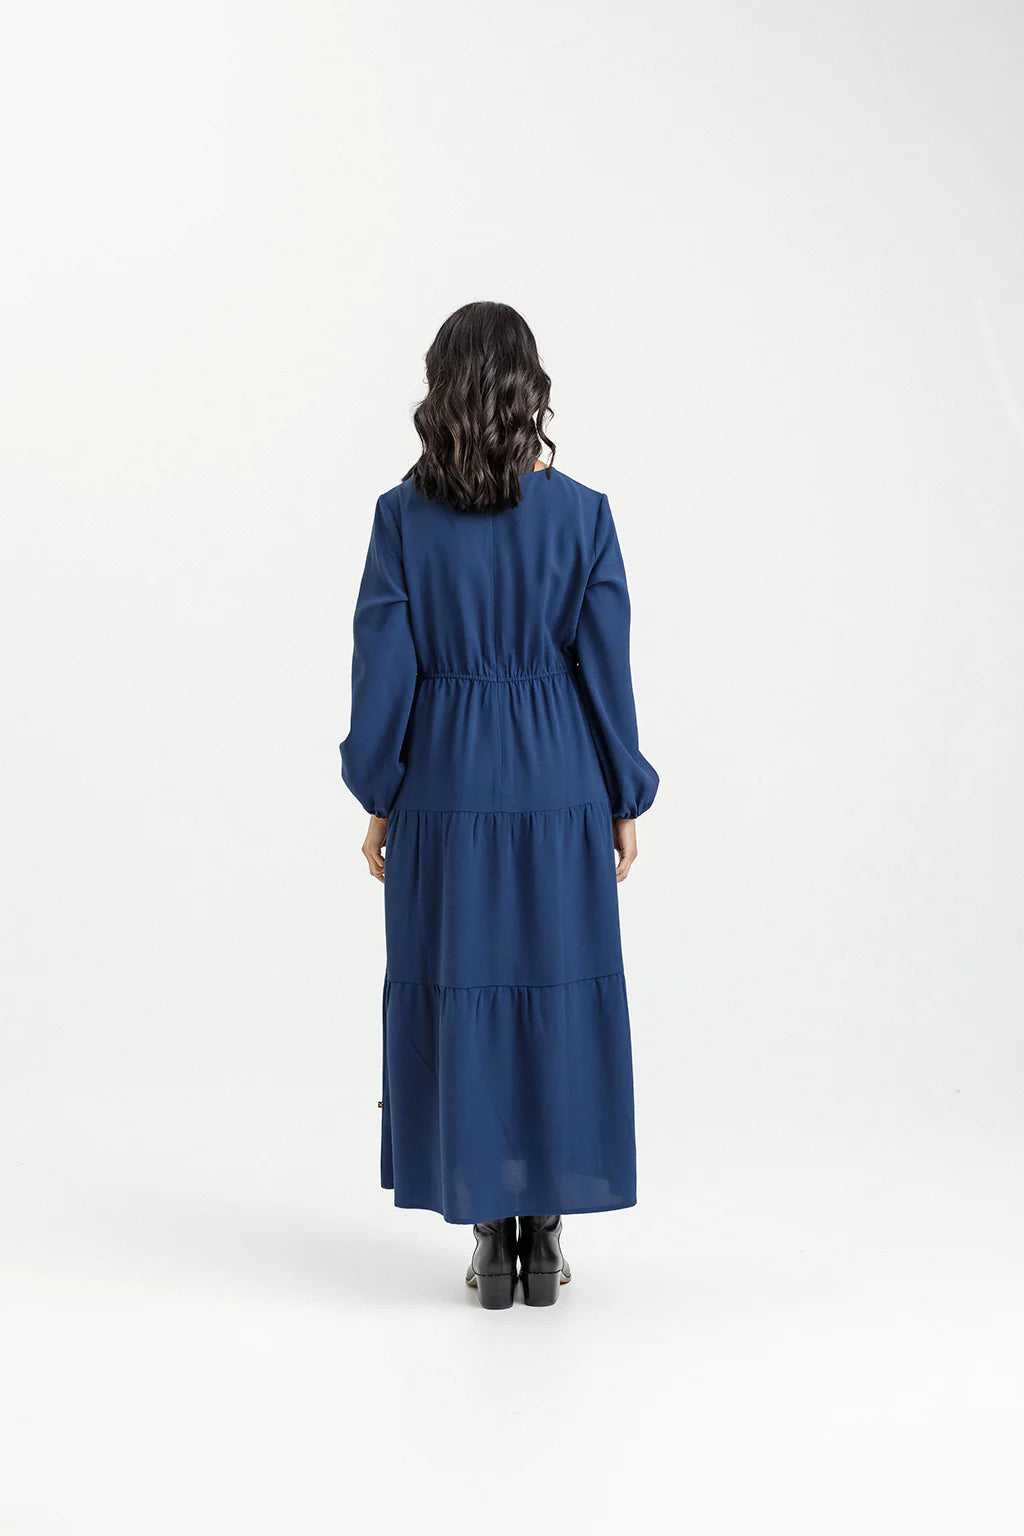 Flora Dress - Indigo Blue - HOME LEE Dress NZ LUMA